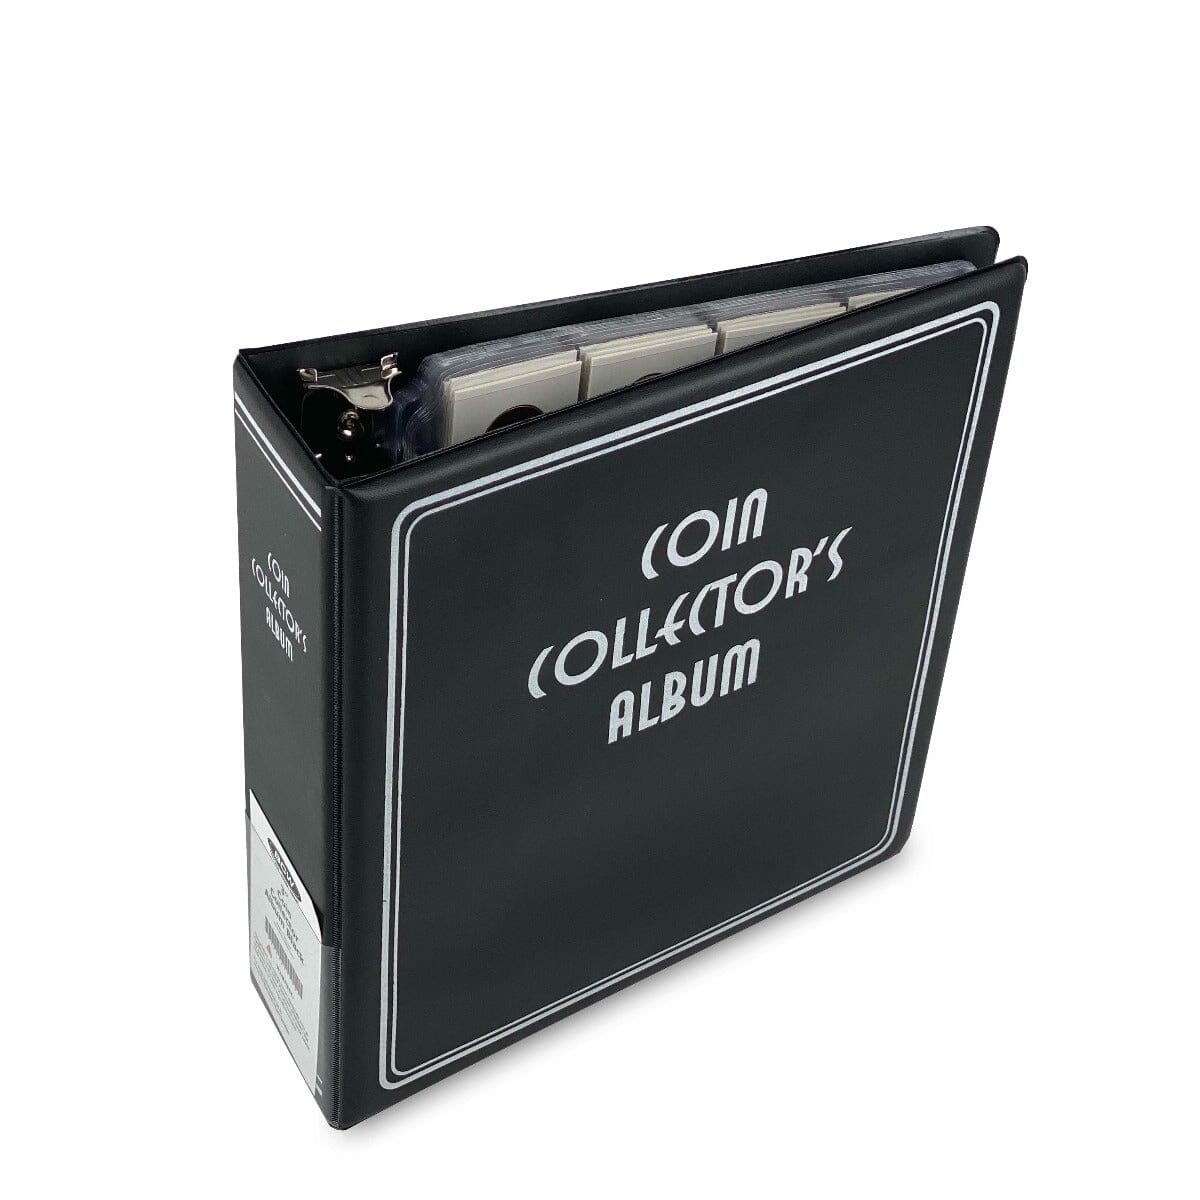 3" Coin Collectors Album- Black